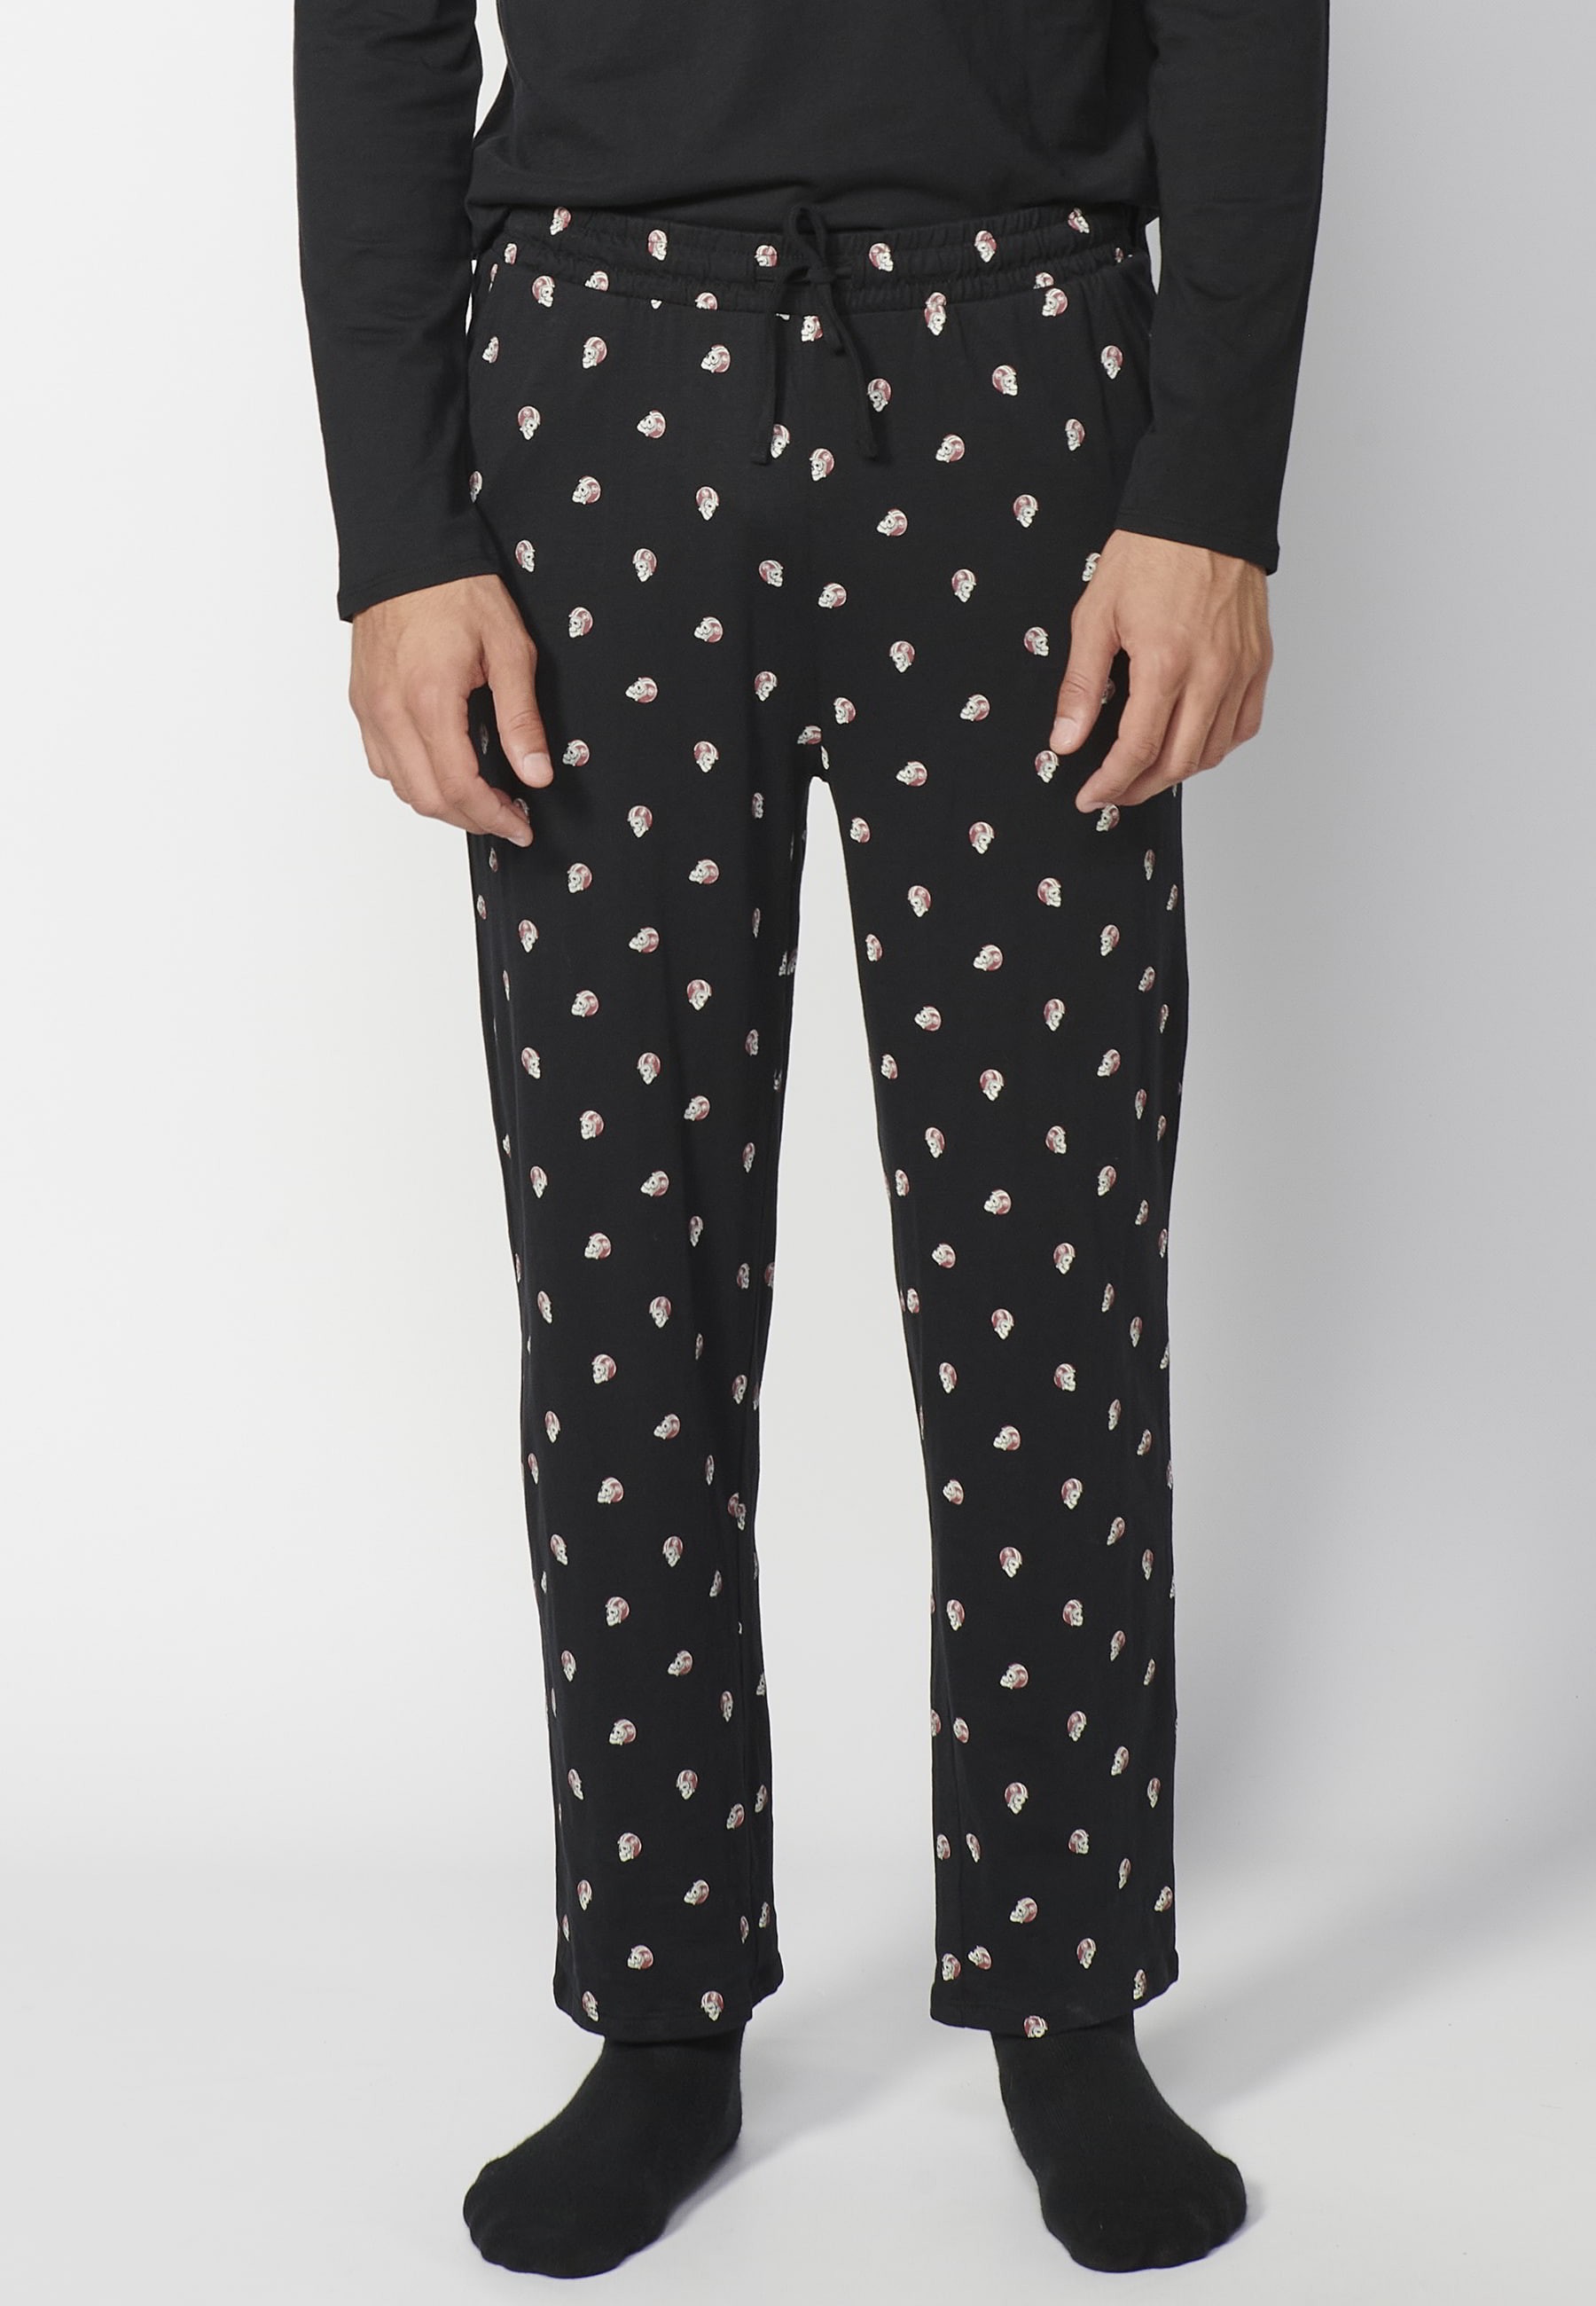 Long black cotton pajamas for men